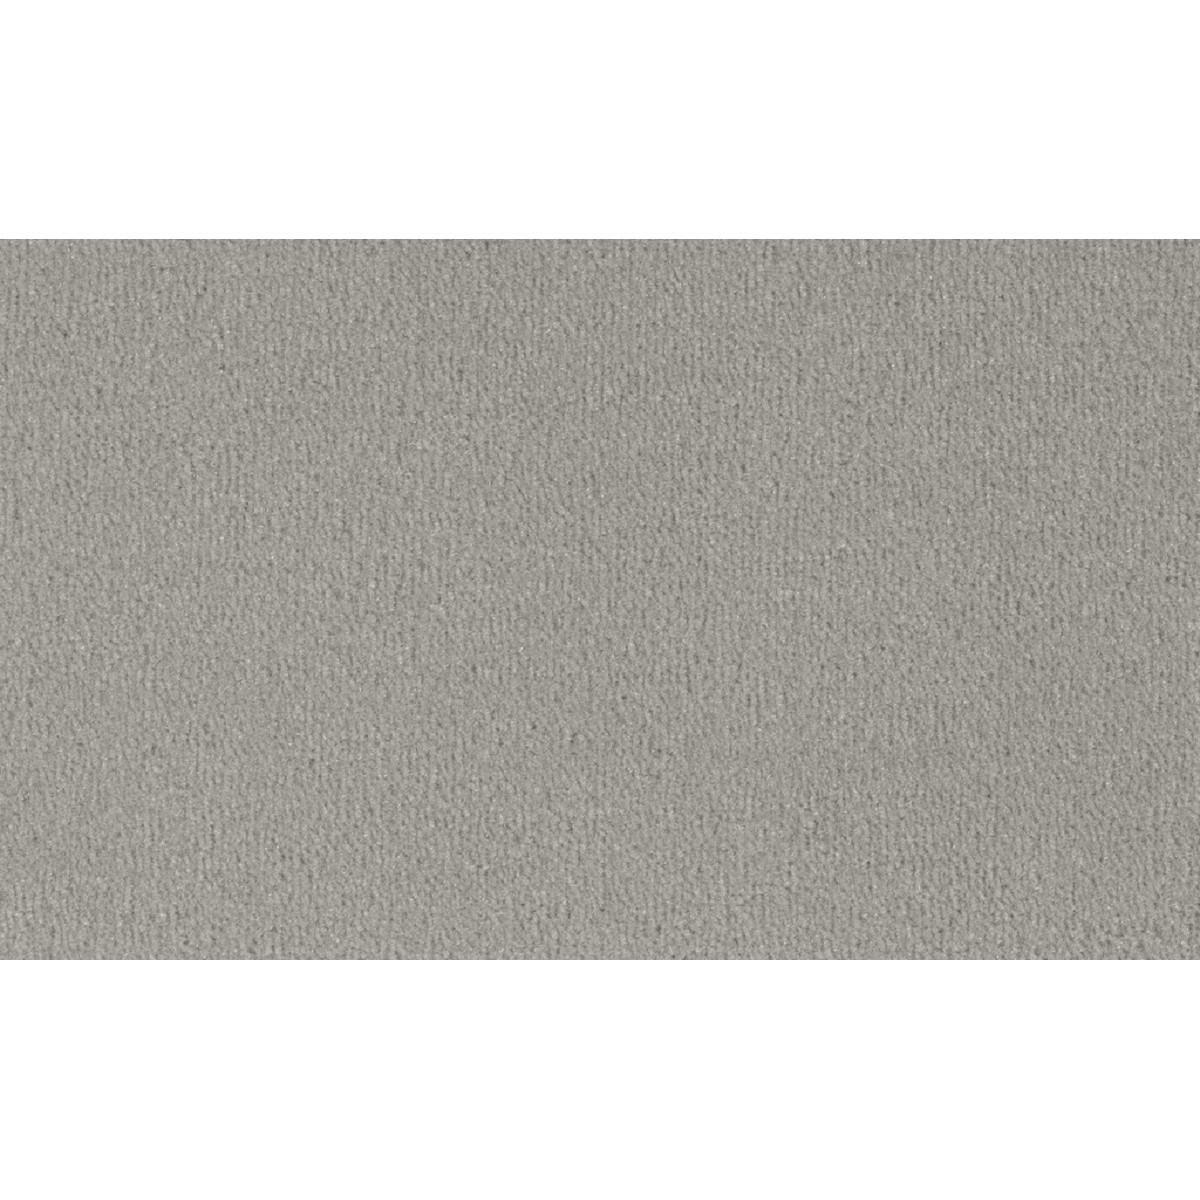 AKCE: 133x250 cm Metrážový koberec Bingo 5Y91 světle šedý